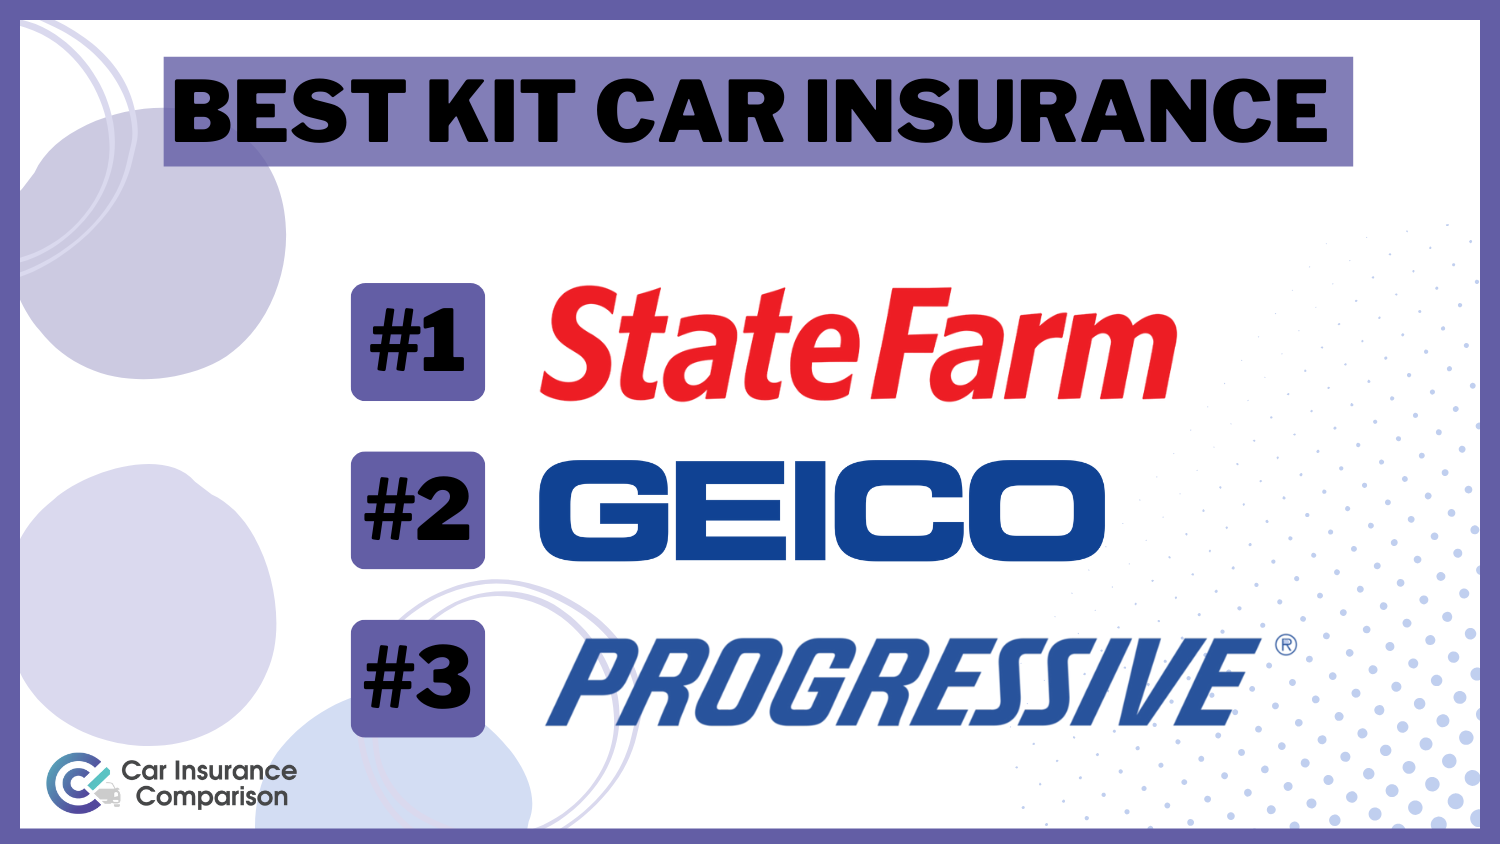 Best Kit Car Insurance: State Farm, Geico, and Progressive